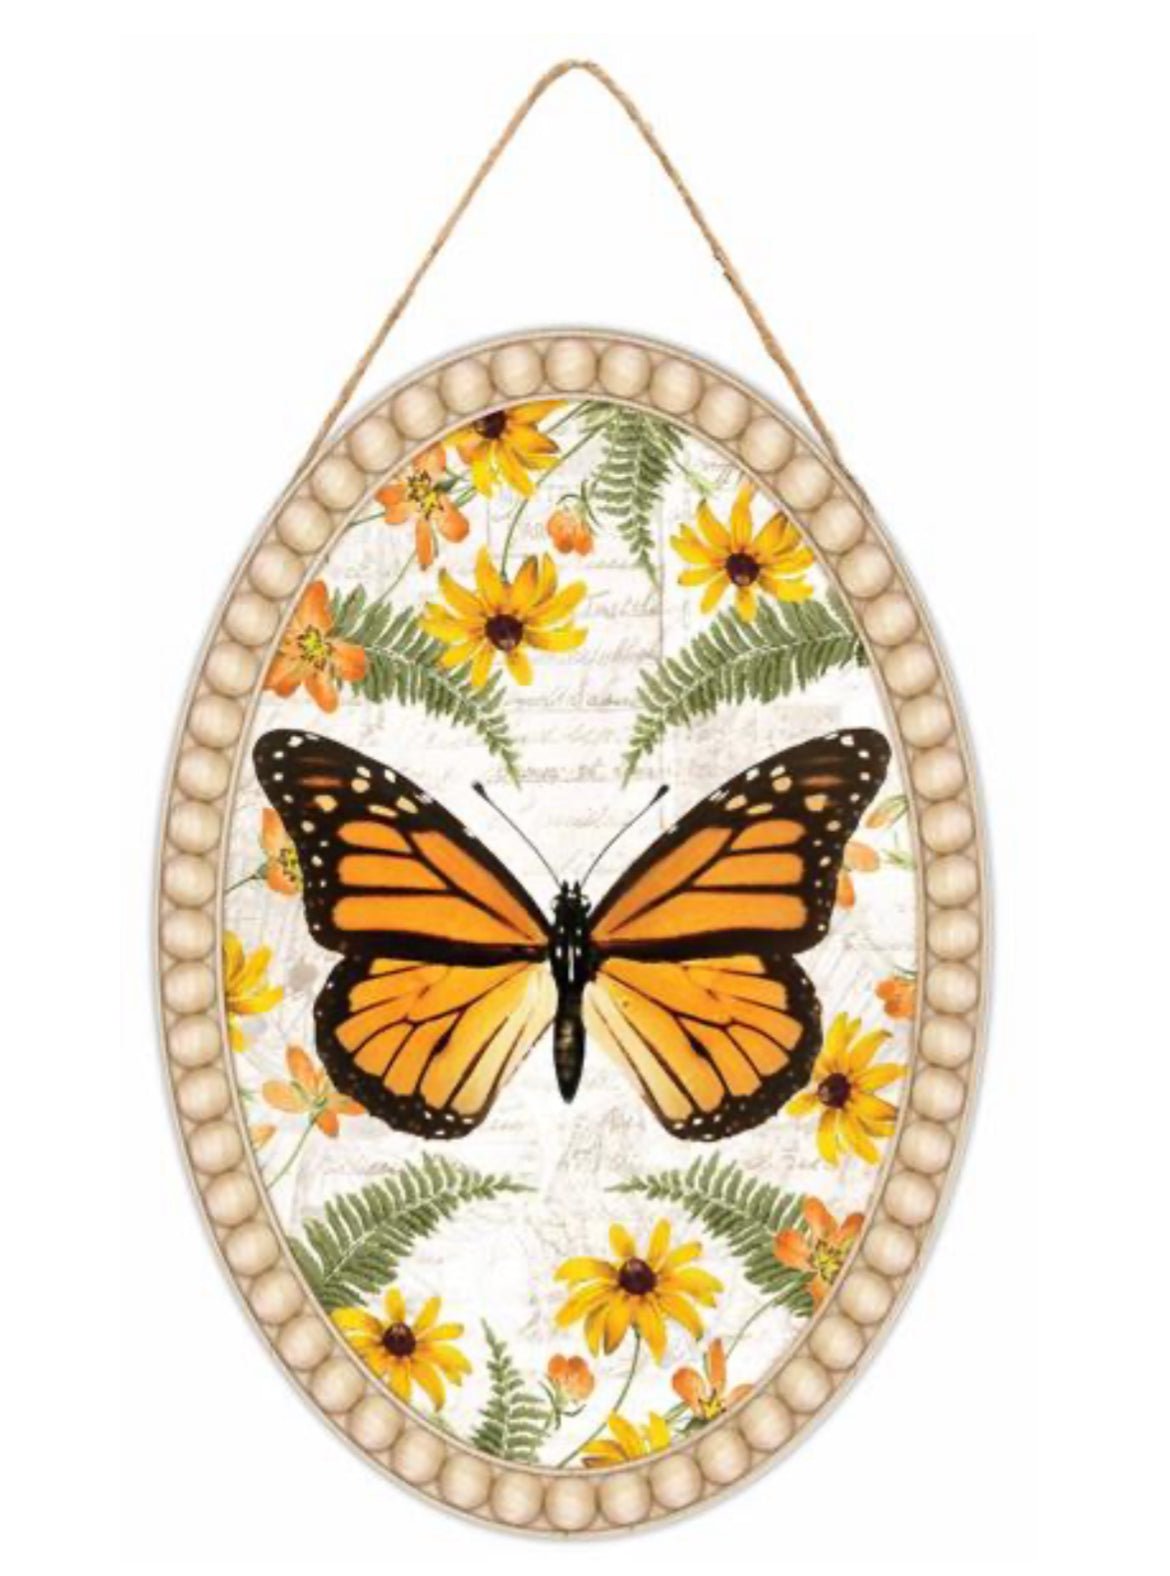 Butterfly oval sign - Greenery Marketsigns for wreathsAP7335